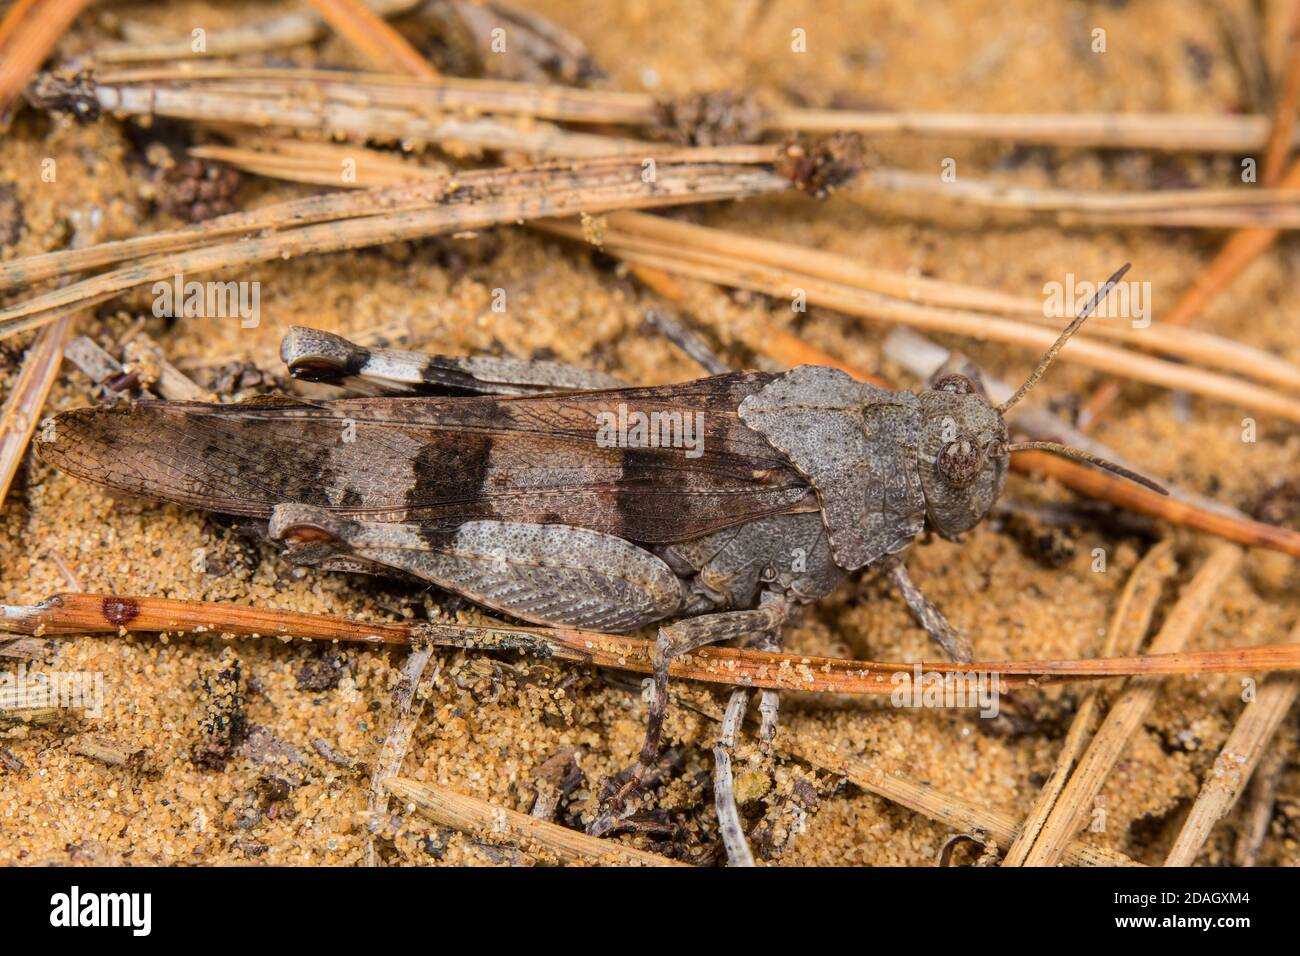 Blue-winged grasshopper (Oedipoda coerulescens, Oedipoda caerulescens), sits on the ground, Germany Stock Photo